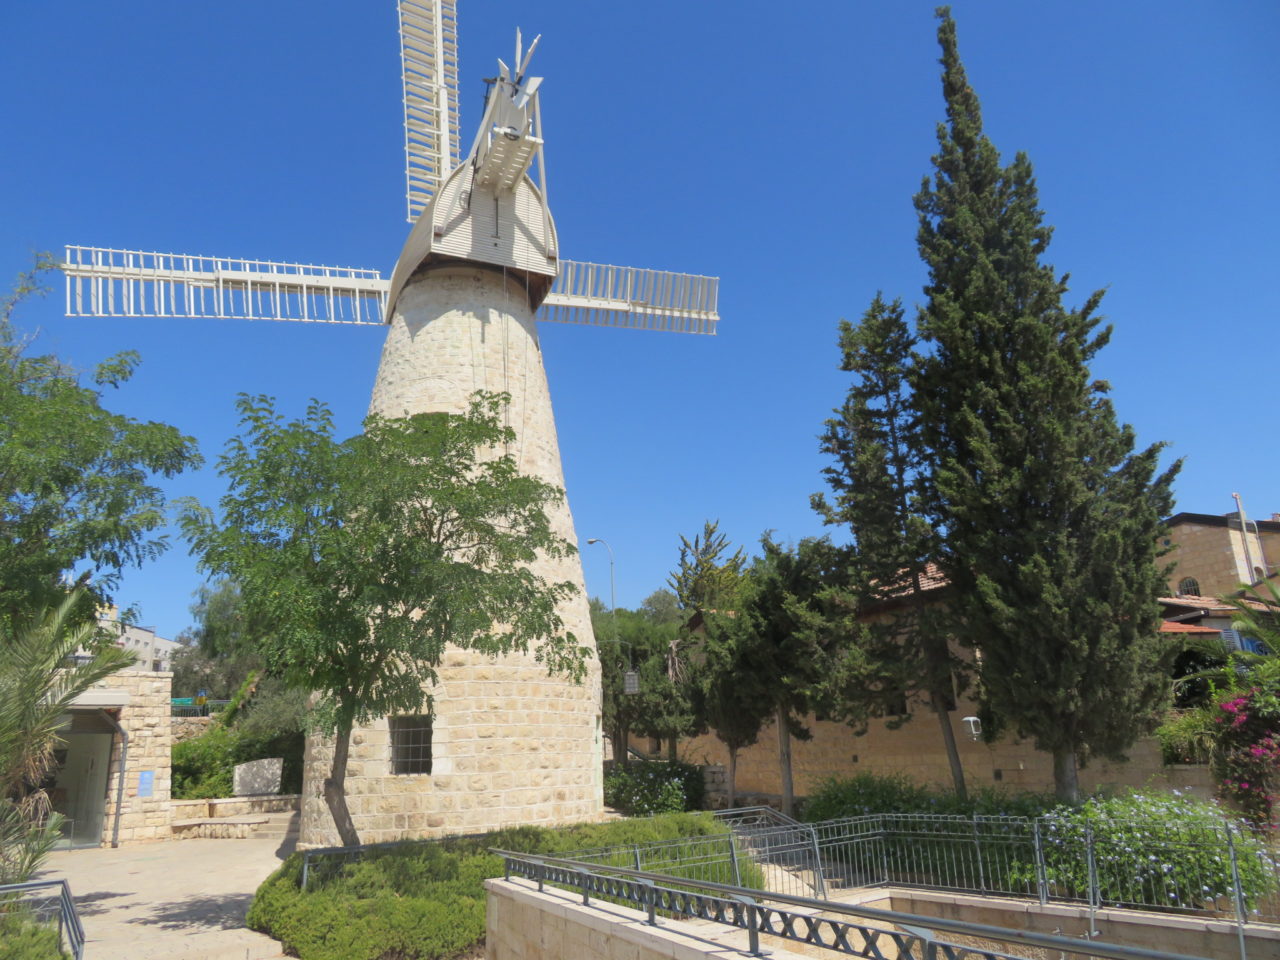 The joys of walking Jerusalem - The windmill in the Yomin Moshe neighborhood